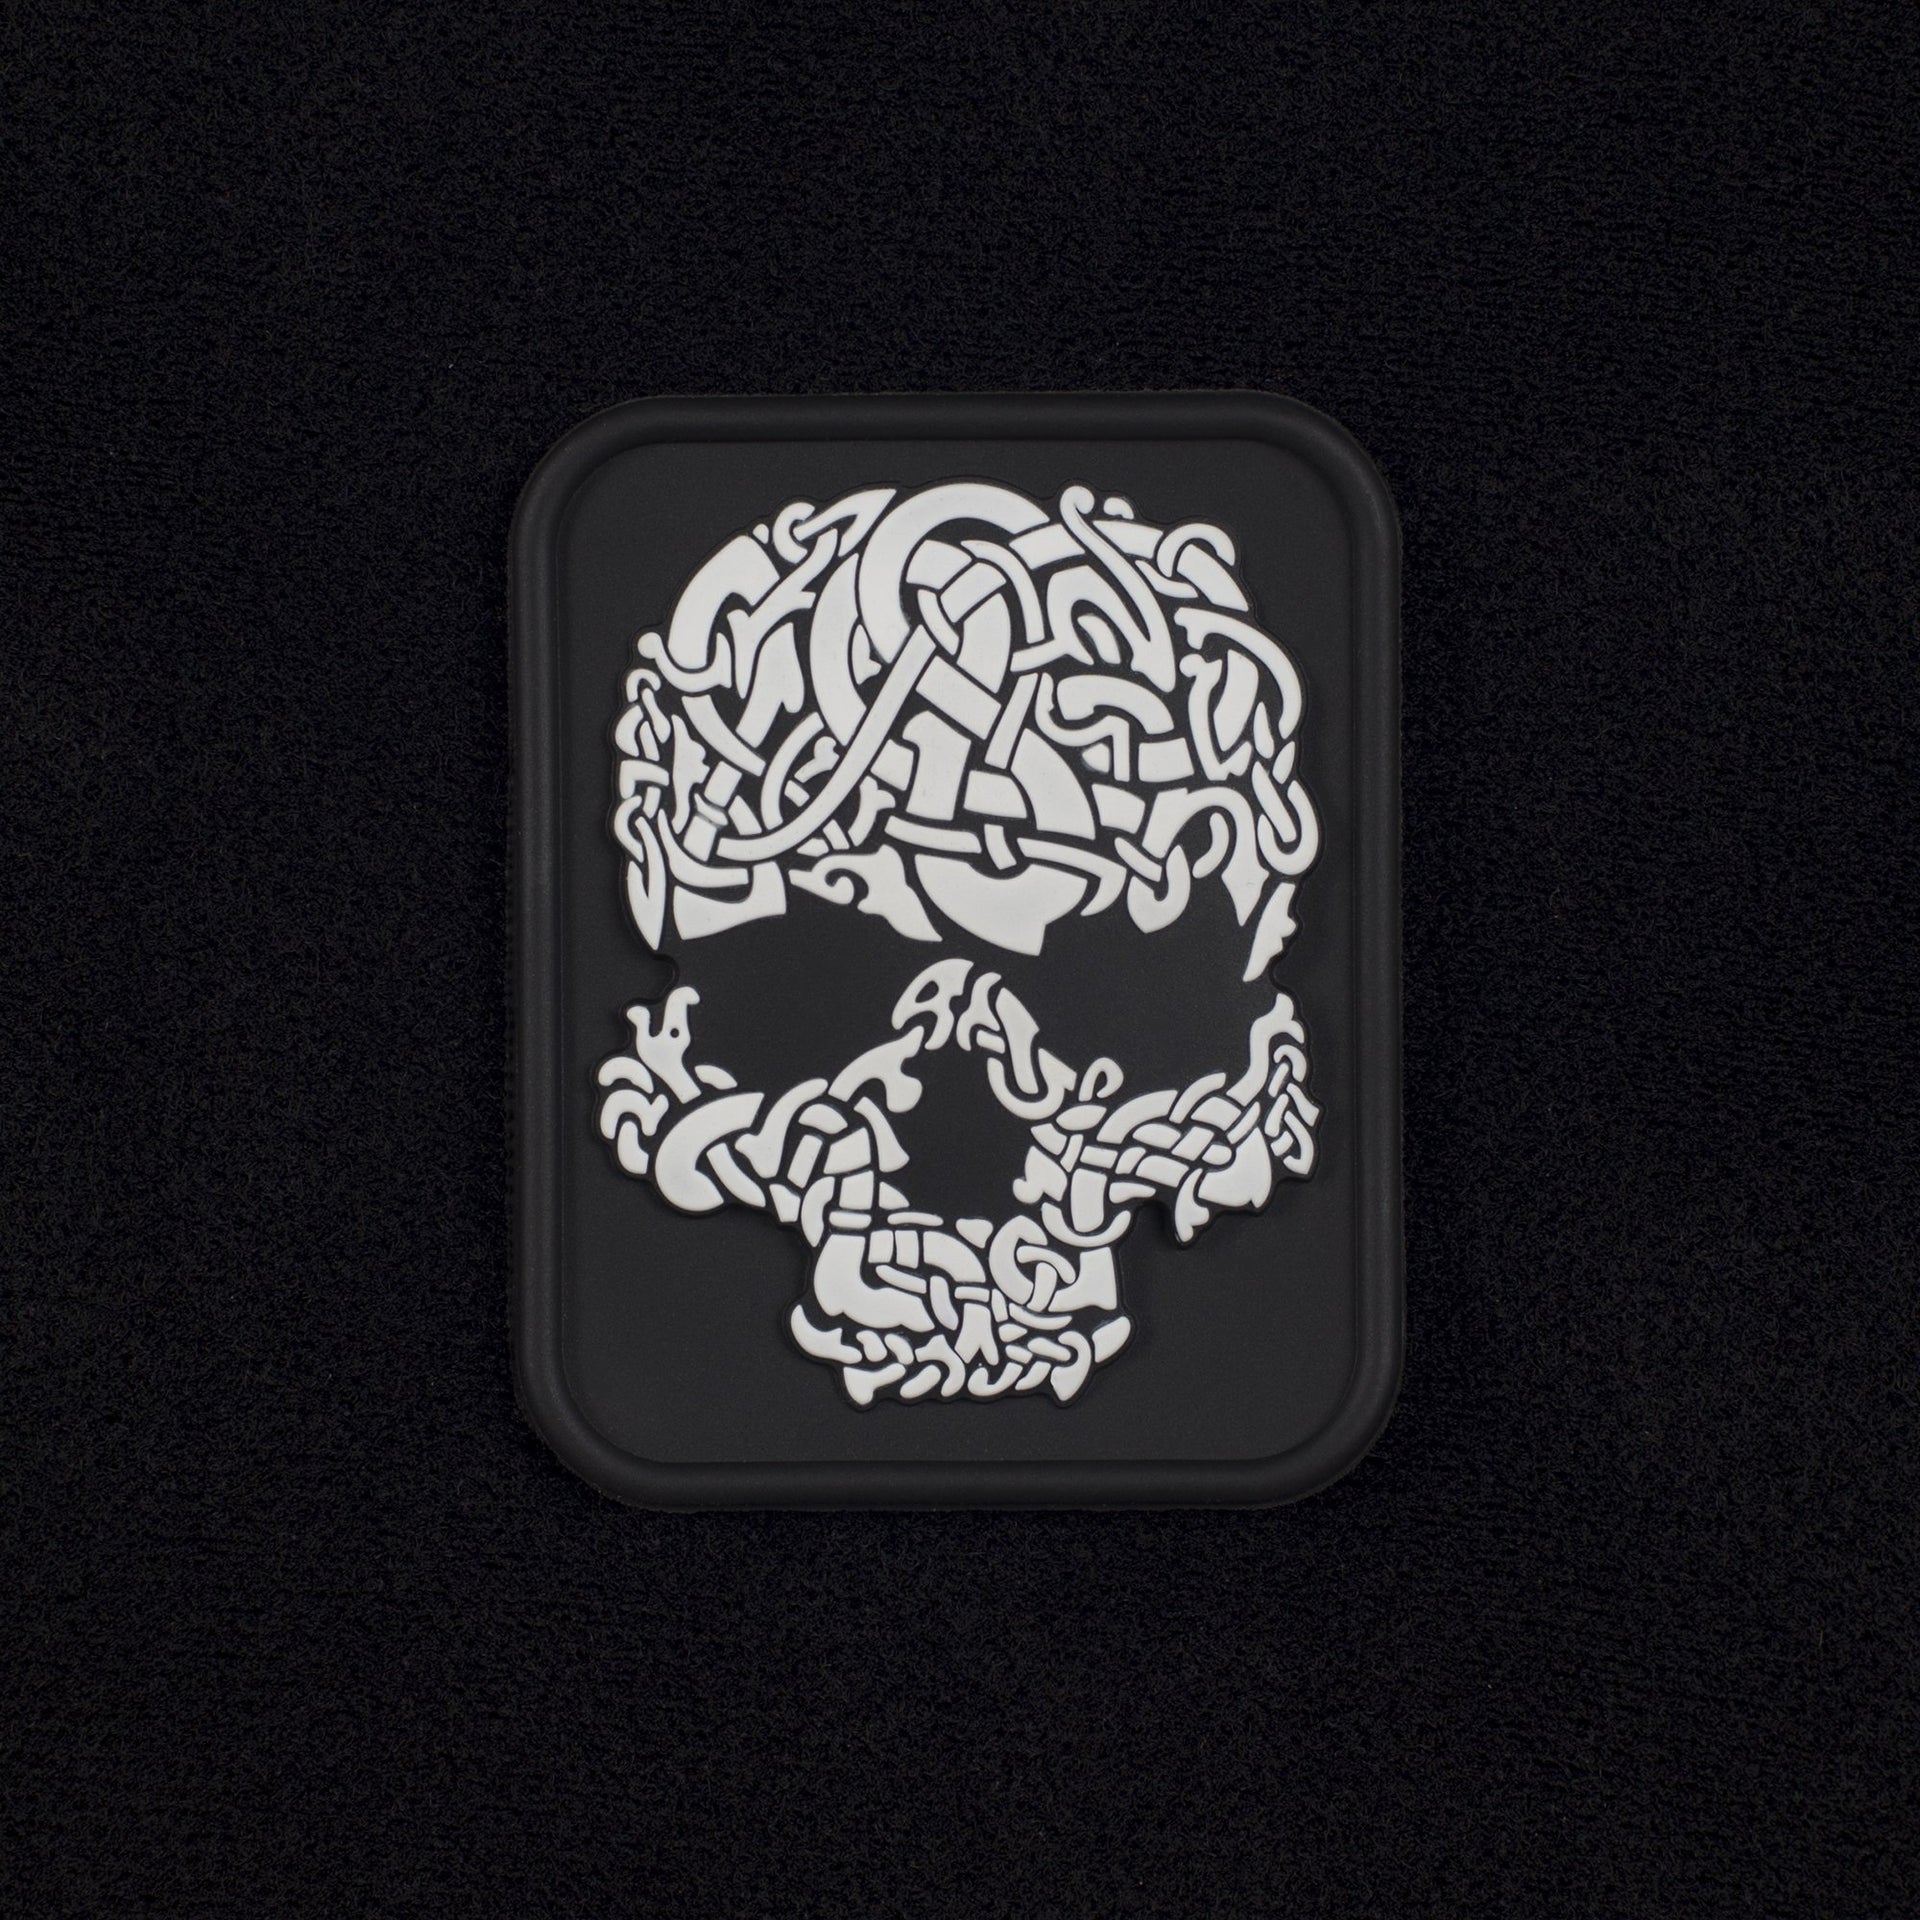 M-Tac patch Viking Skull PVC